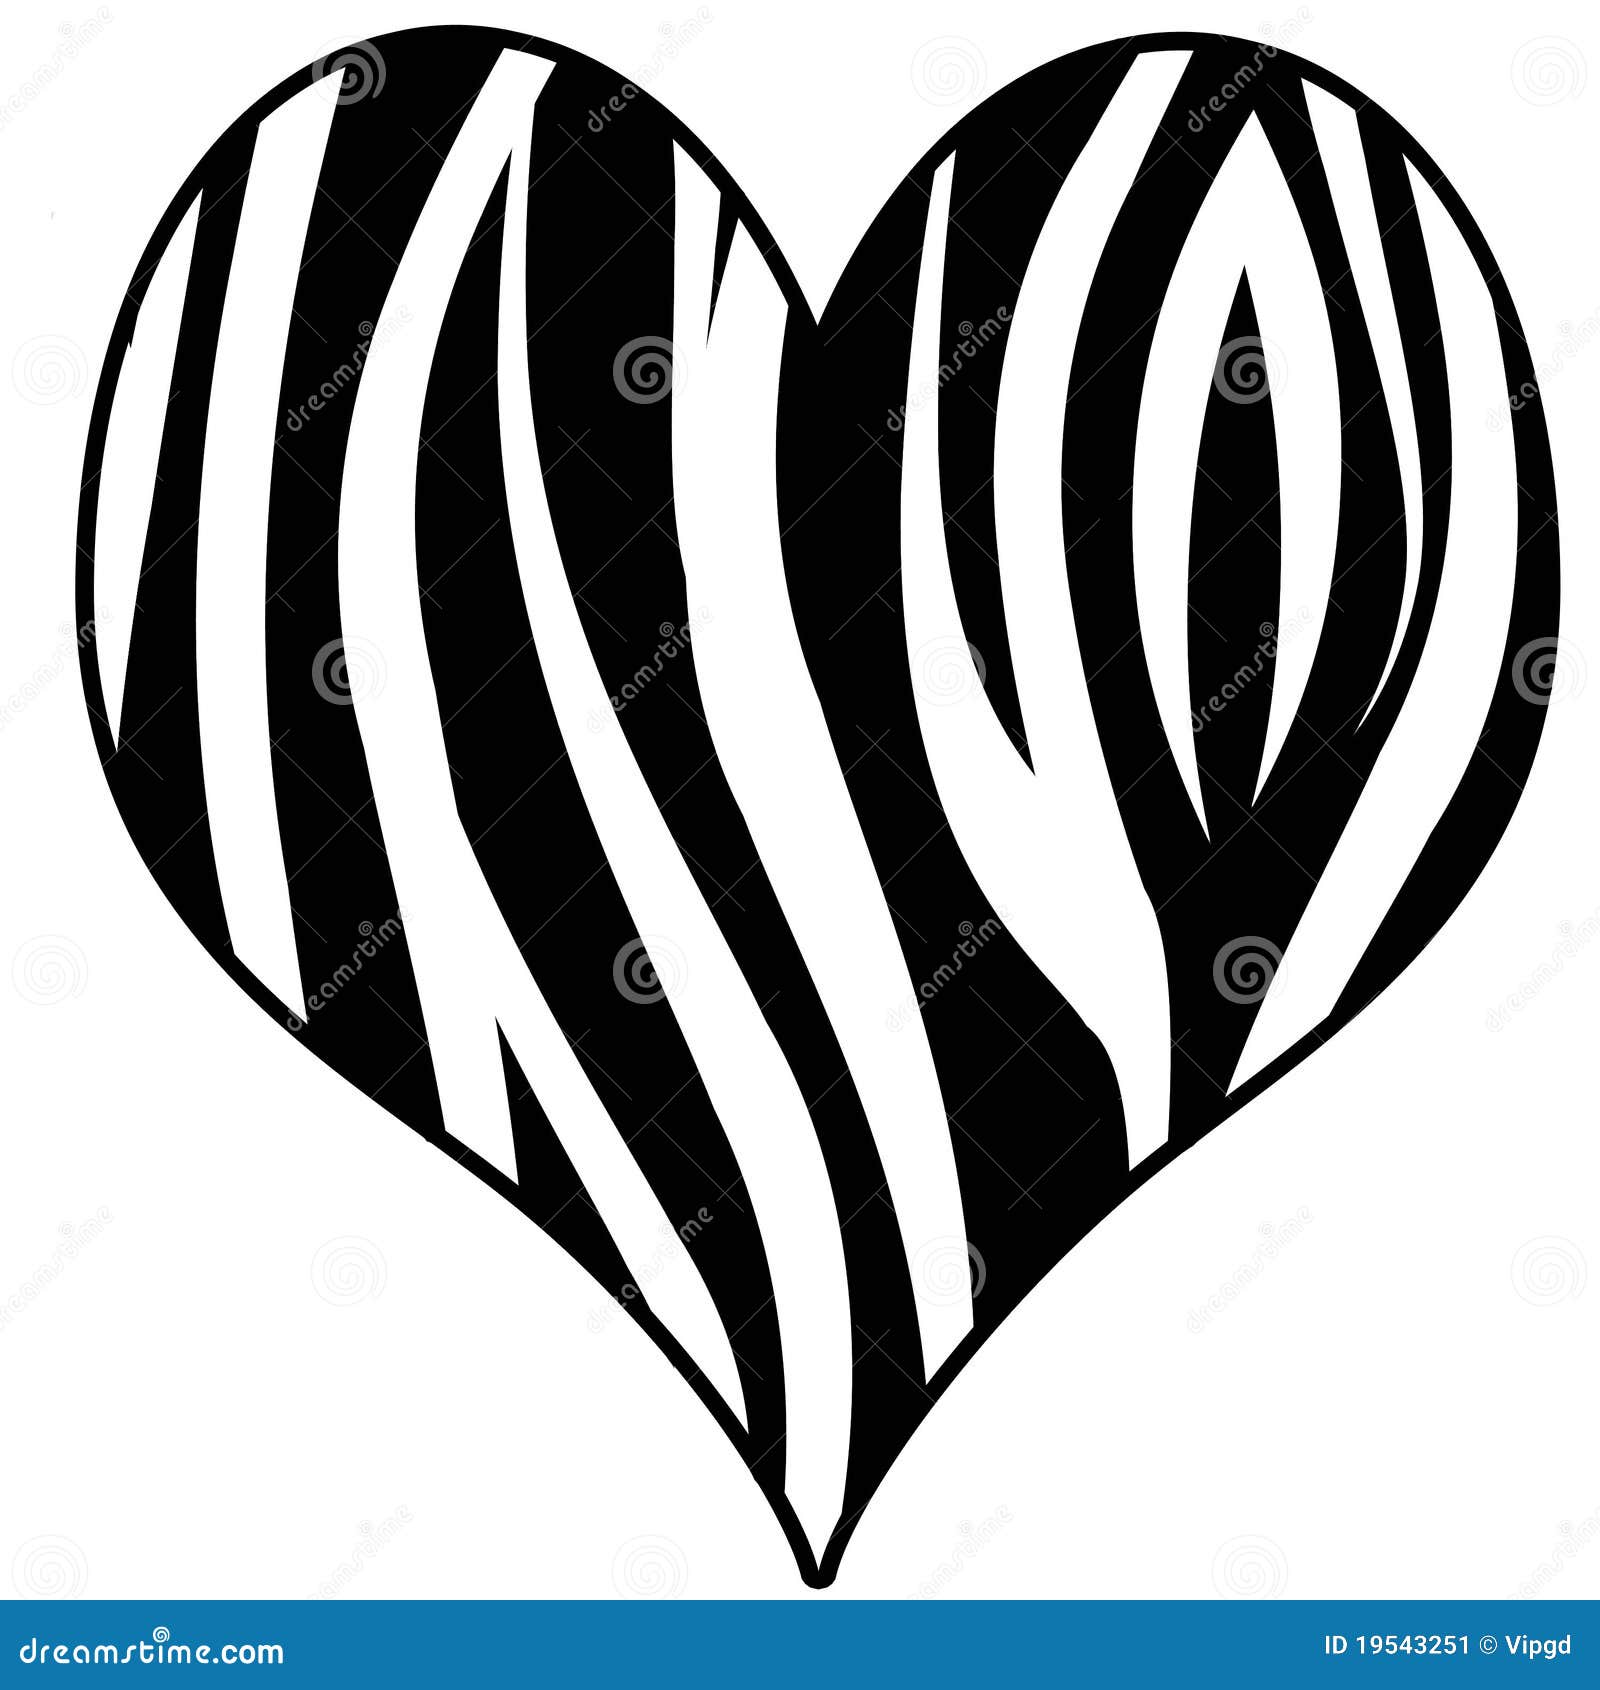 clip art zebra heart - photo #44